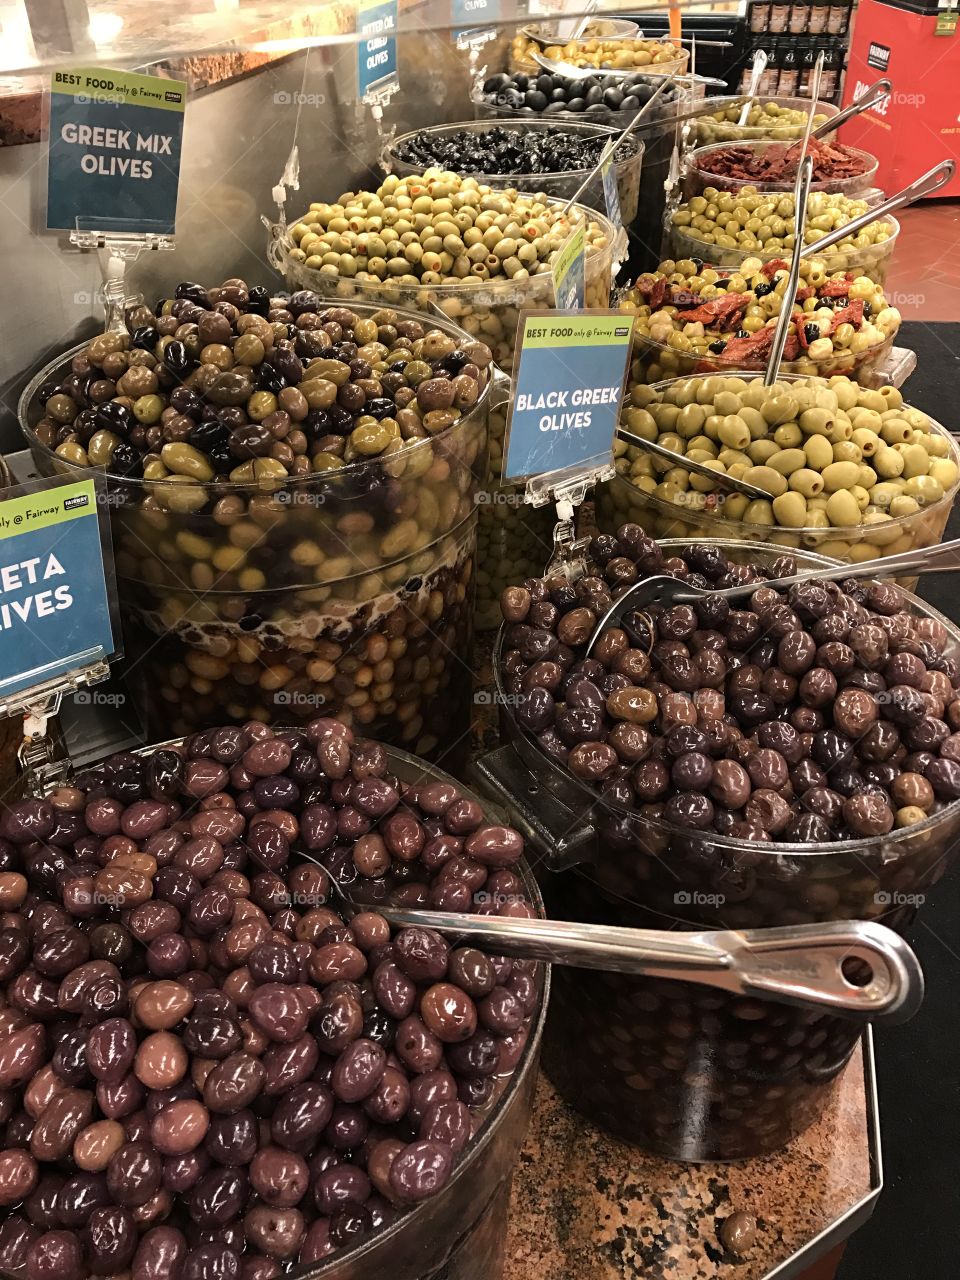 Olives, olives everywhere!